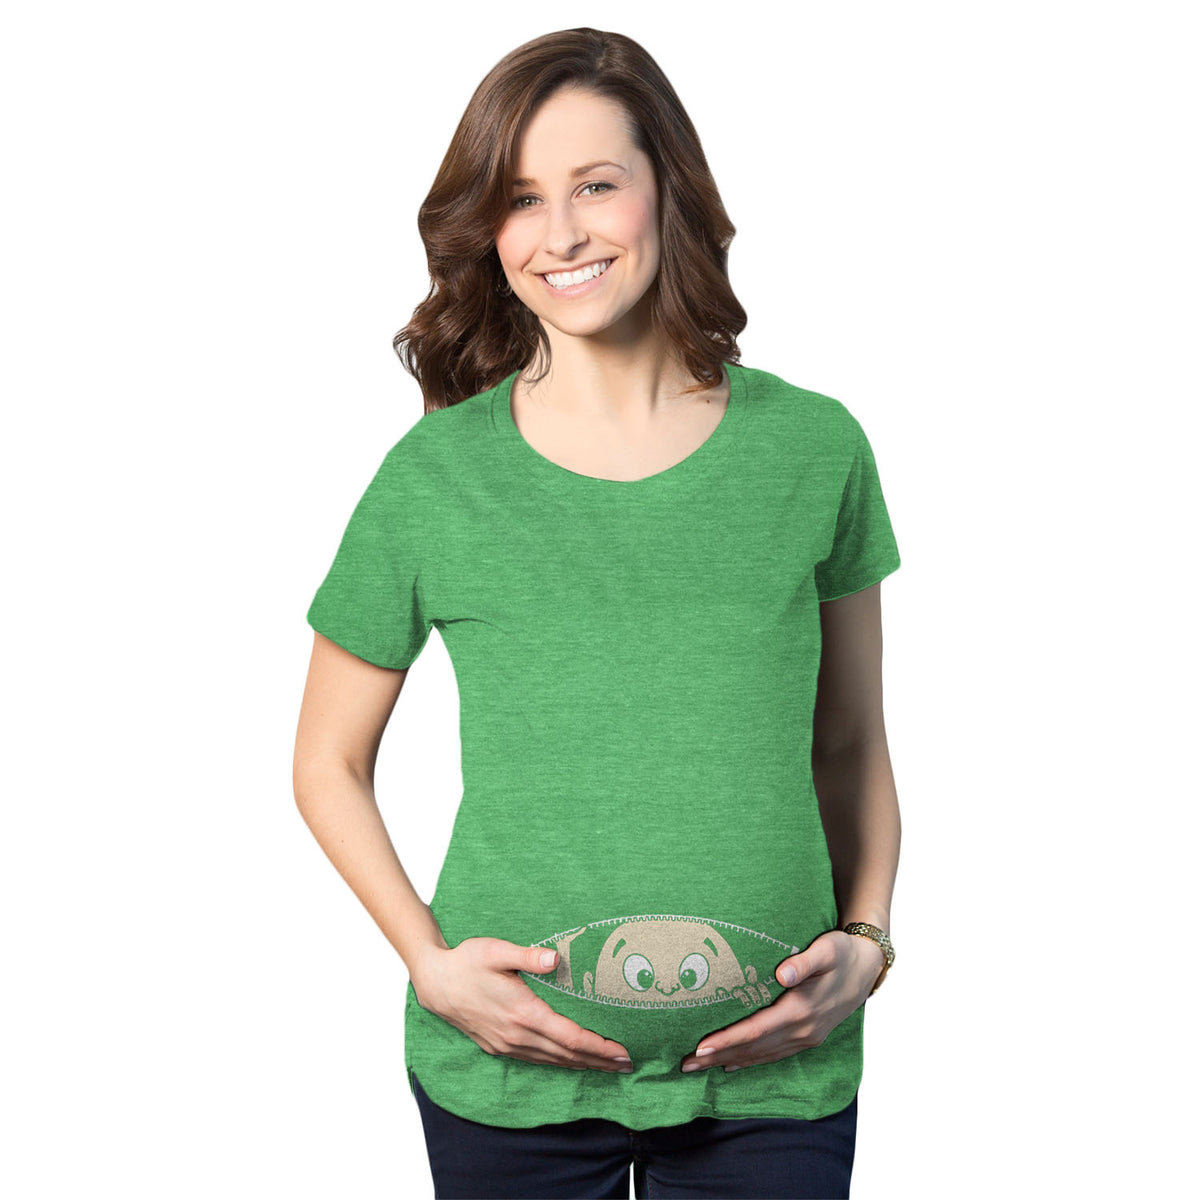 Funny Green Peeking Baby Maternity T Shirt Nerdy Peeking Tee